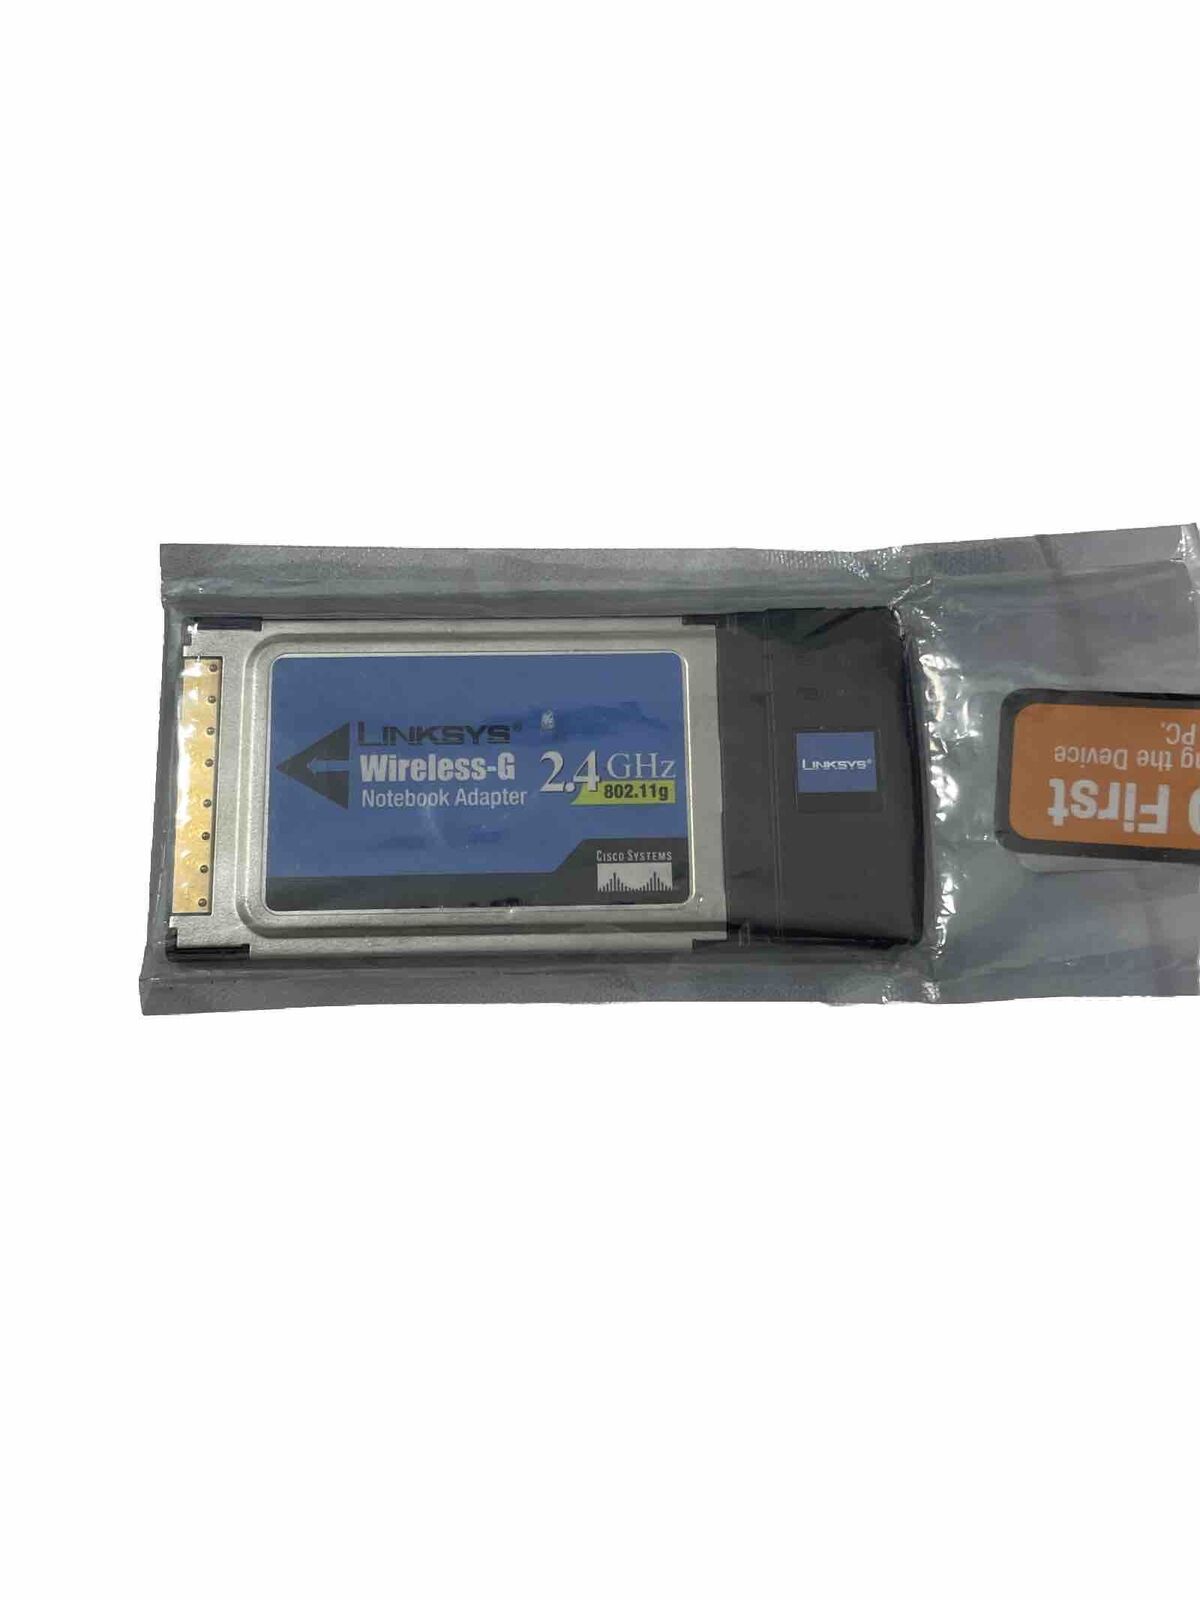 Cisco Linksys WPC54G Wireless-G Notebook Adapter CardBus Adaptor Card Laptop PC